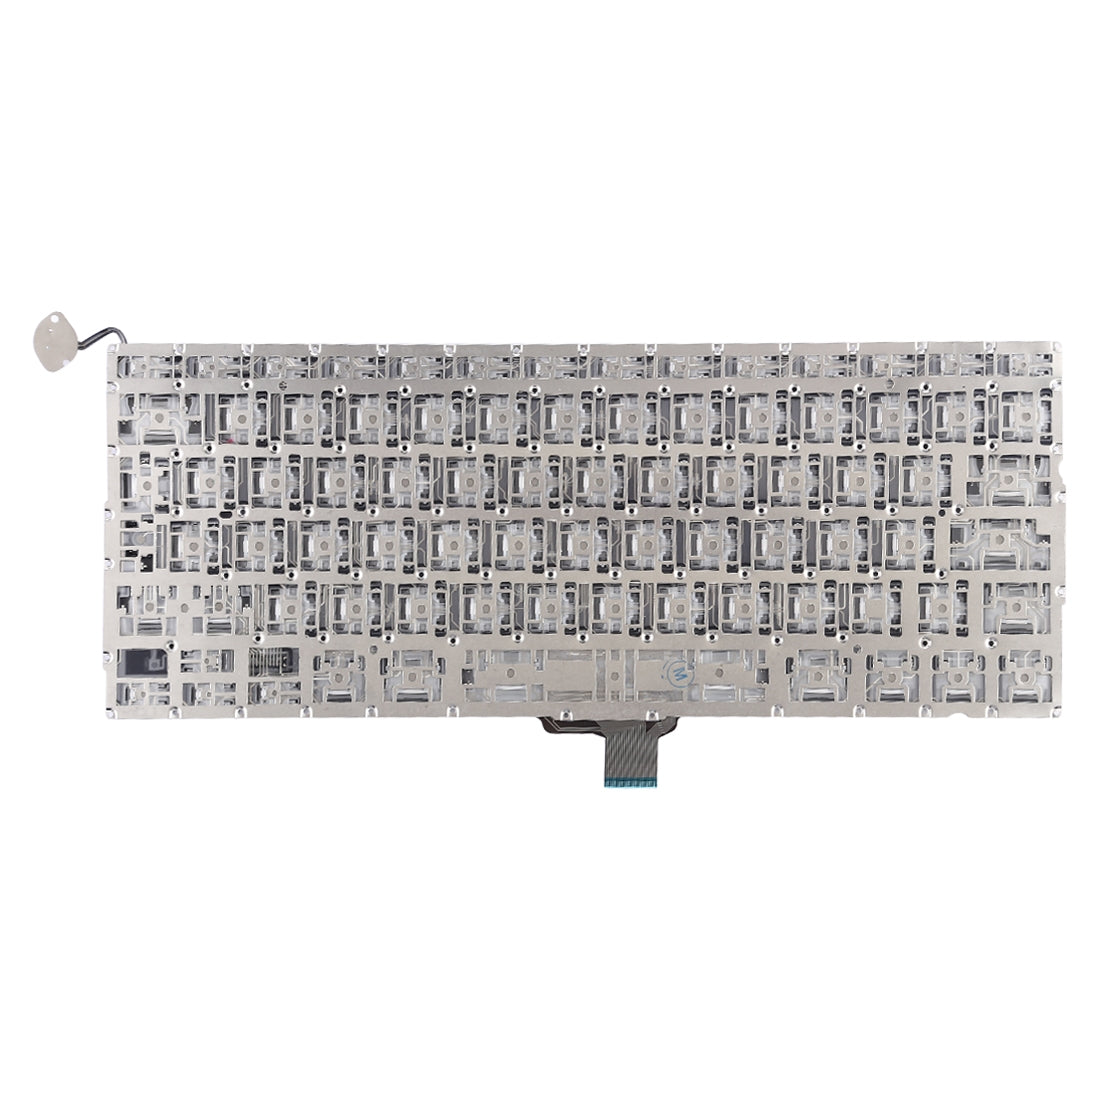 Keyboard FR version without ñ Apple MacBook Pro 13 A1278